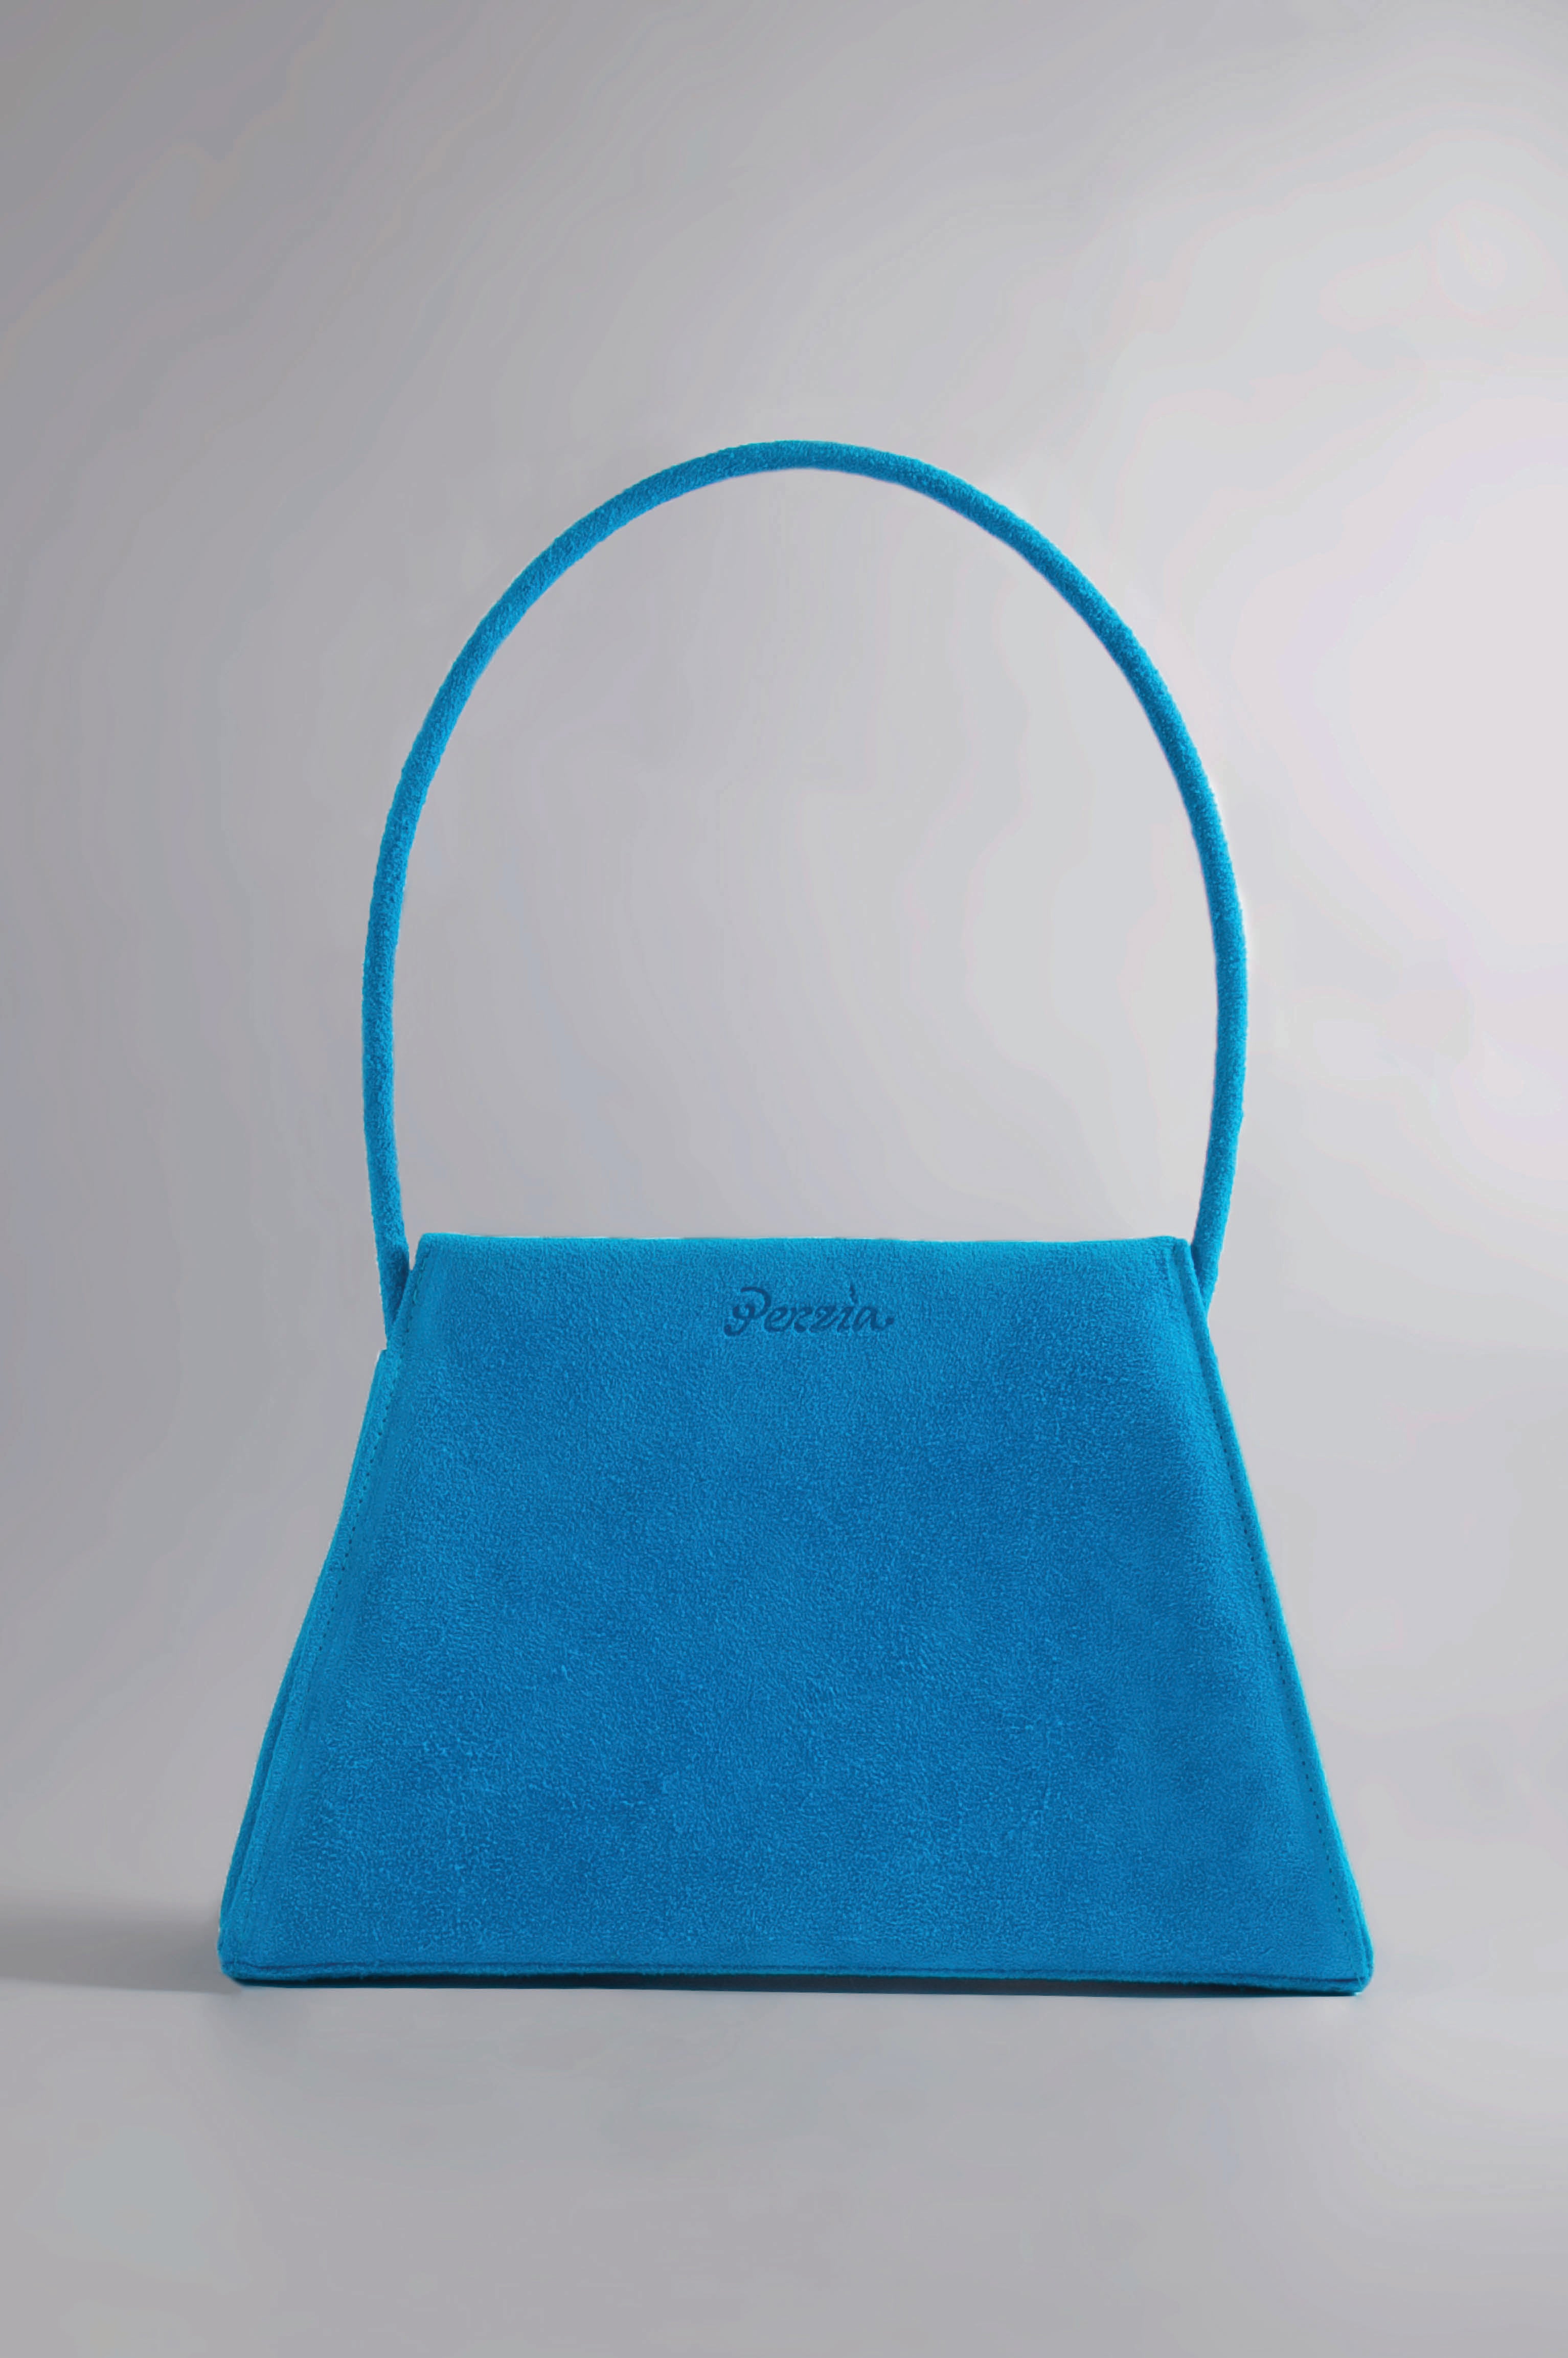 Handbags | Kish Red Handbag | Freeup